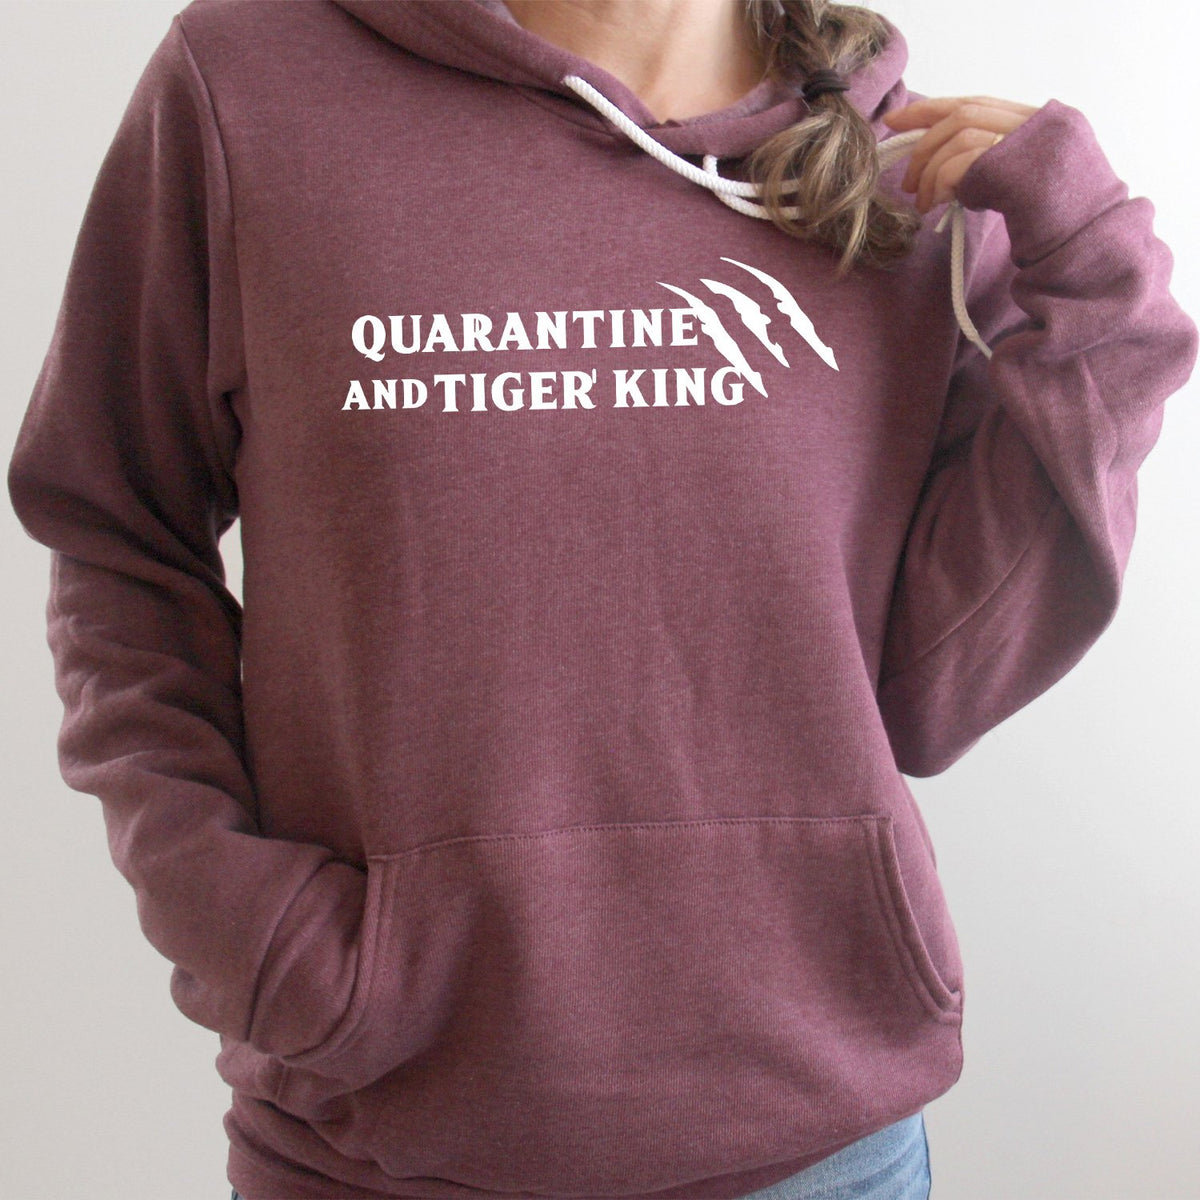 Quarantine and Tiger King - Hoodie Sweatshirt